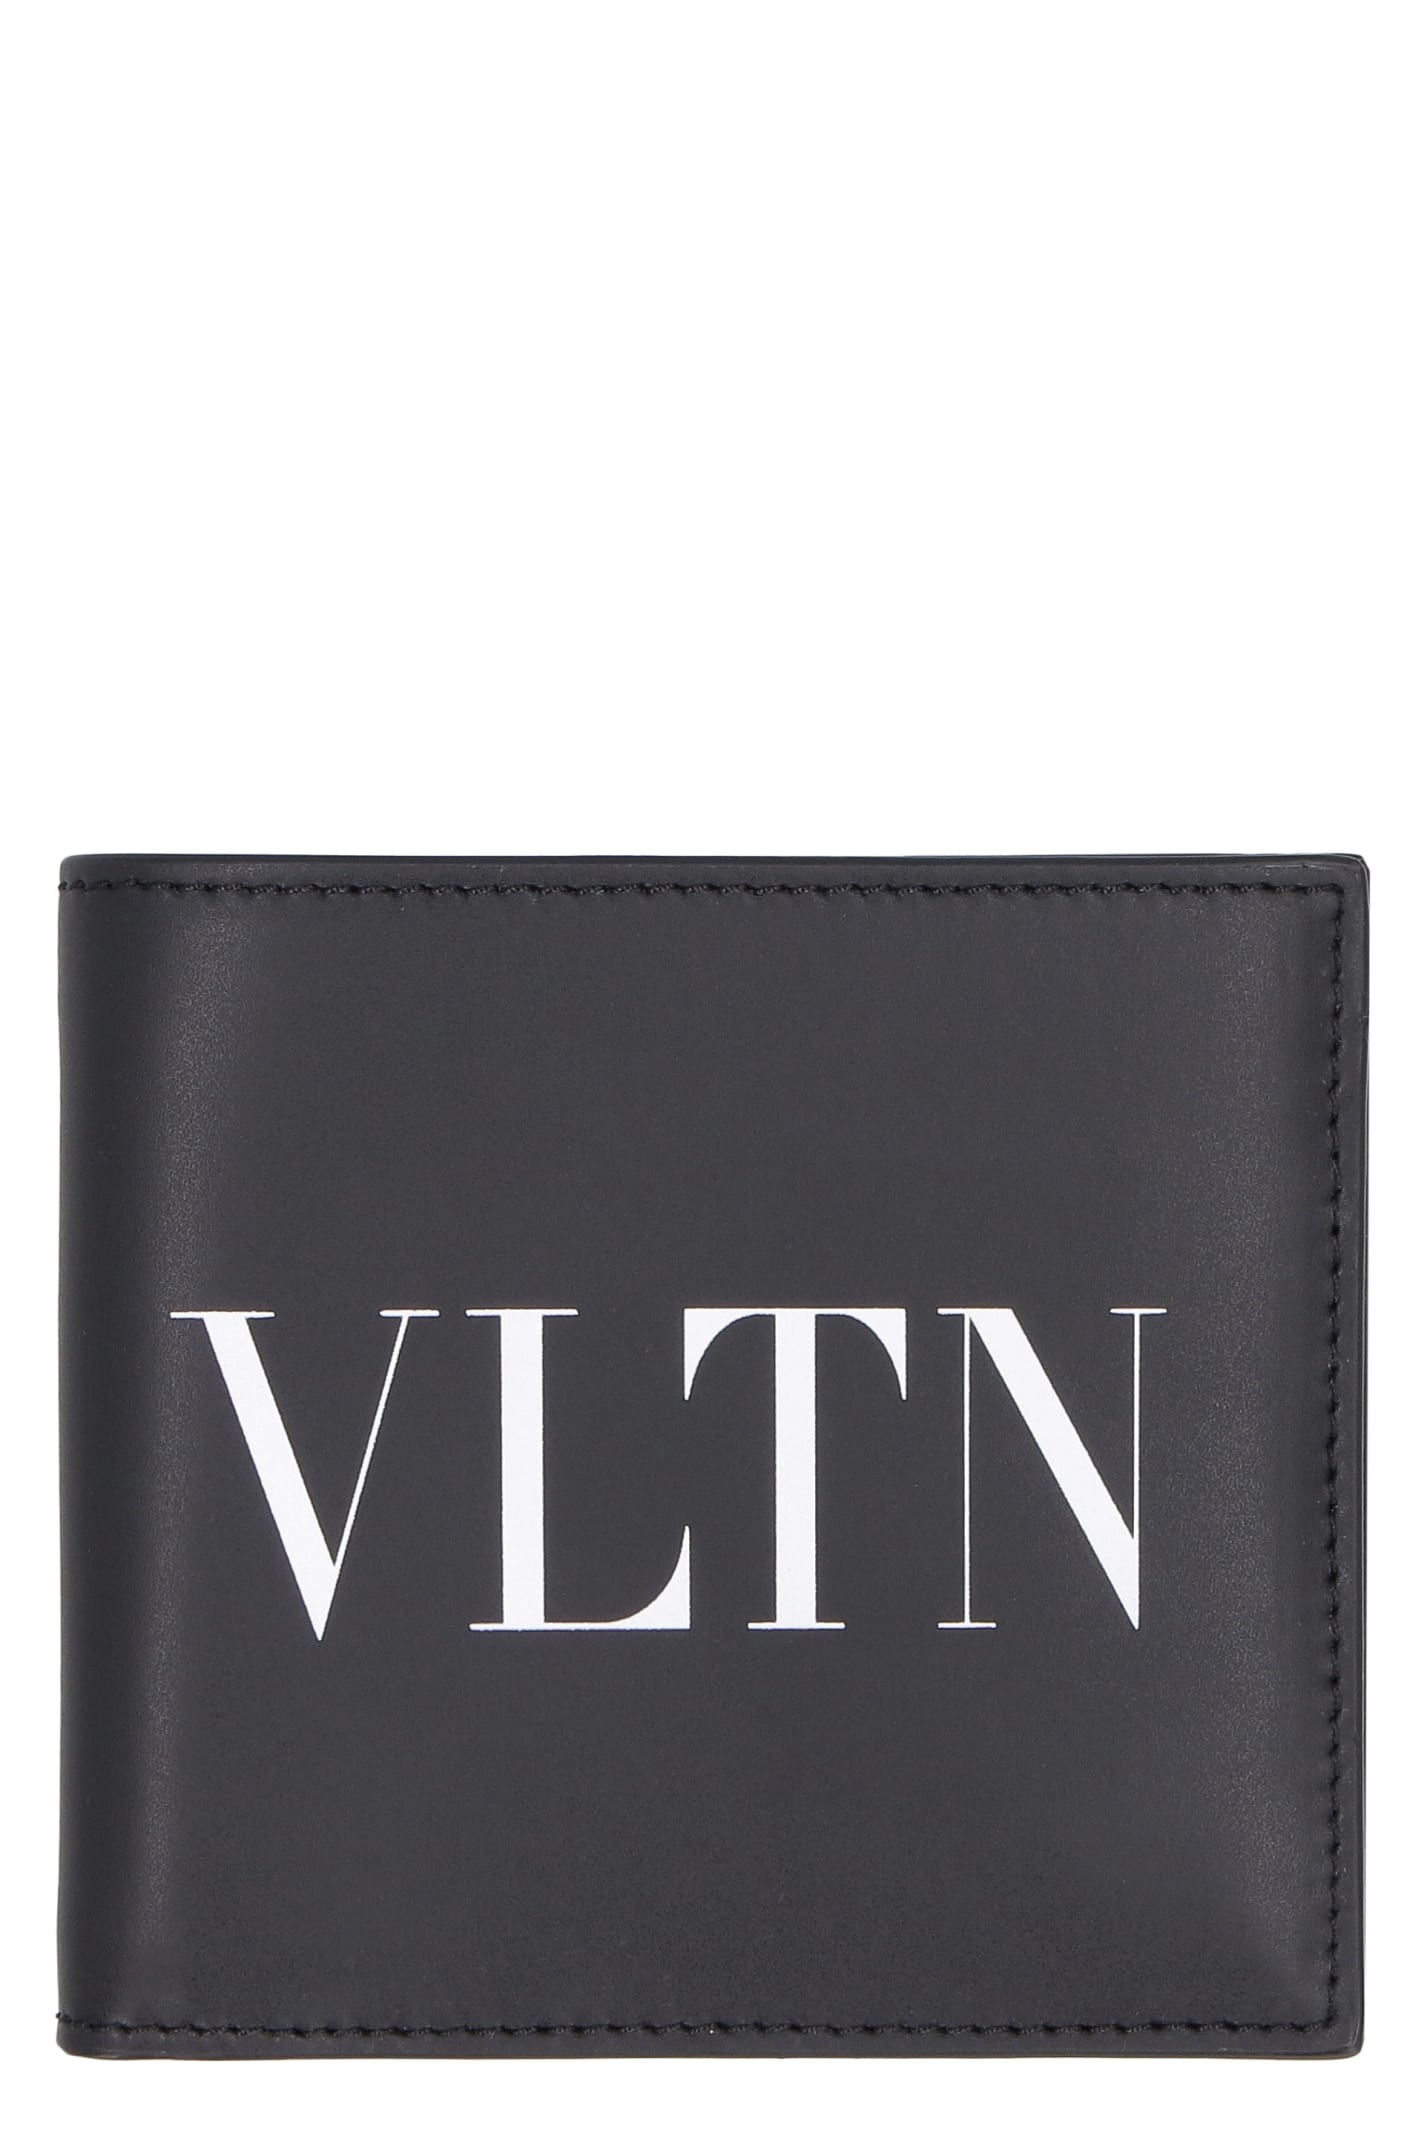 Valentino Garavani - Vltn Leather Flap-over Wallet